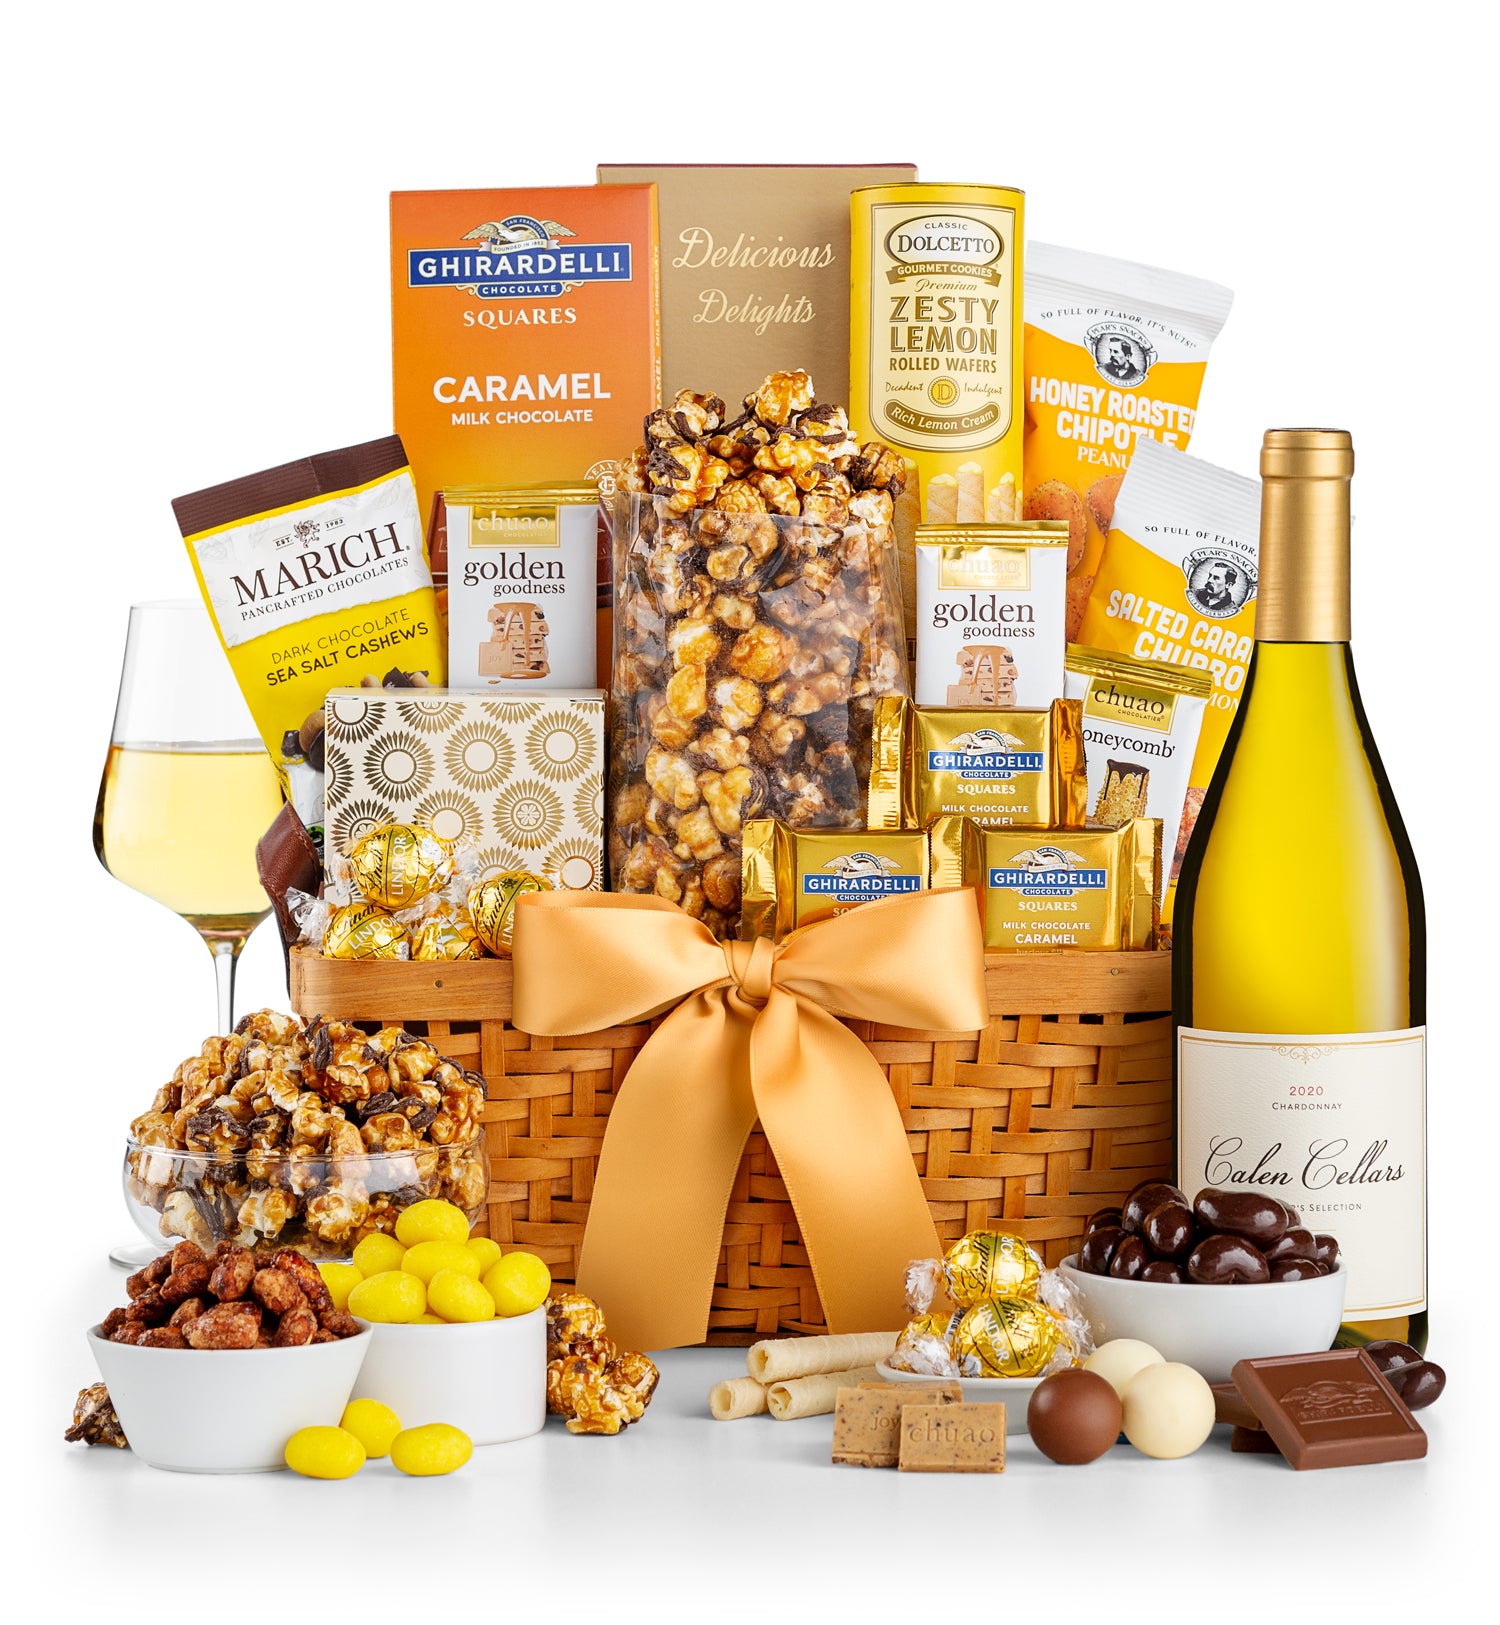 As Good As Gold Gift Basket with Calen Cellars California Chardonnay